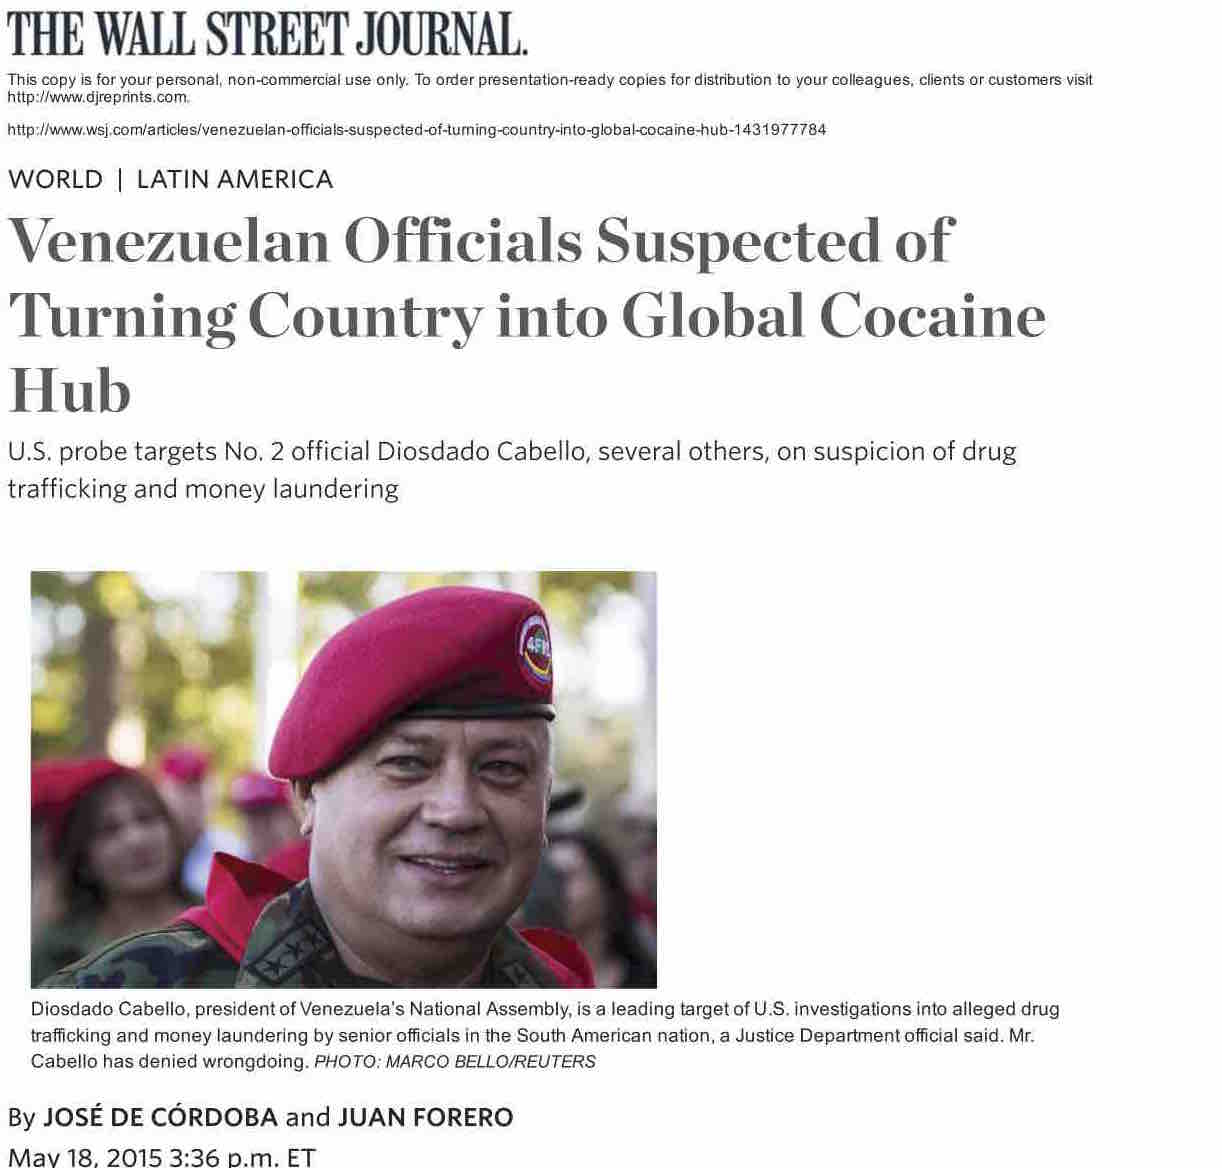 Diosdado Cabello presentará por segunda vez la demanda “enmendada” contra The Wall Street Journal